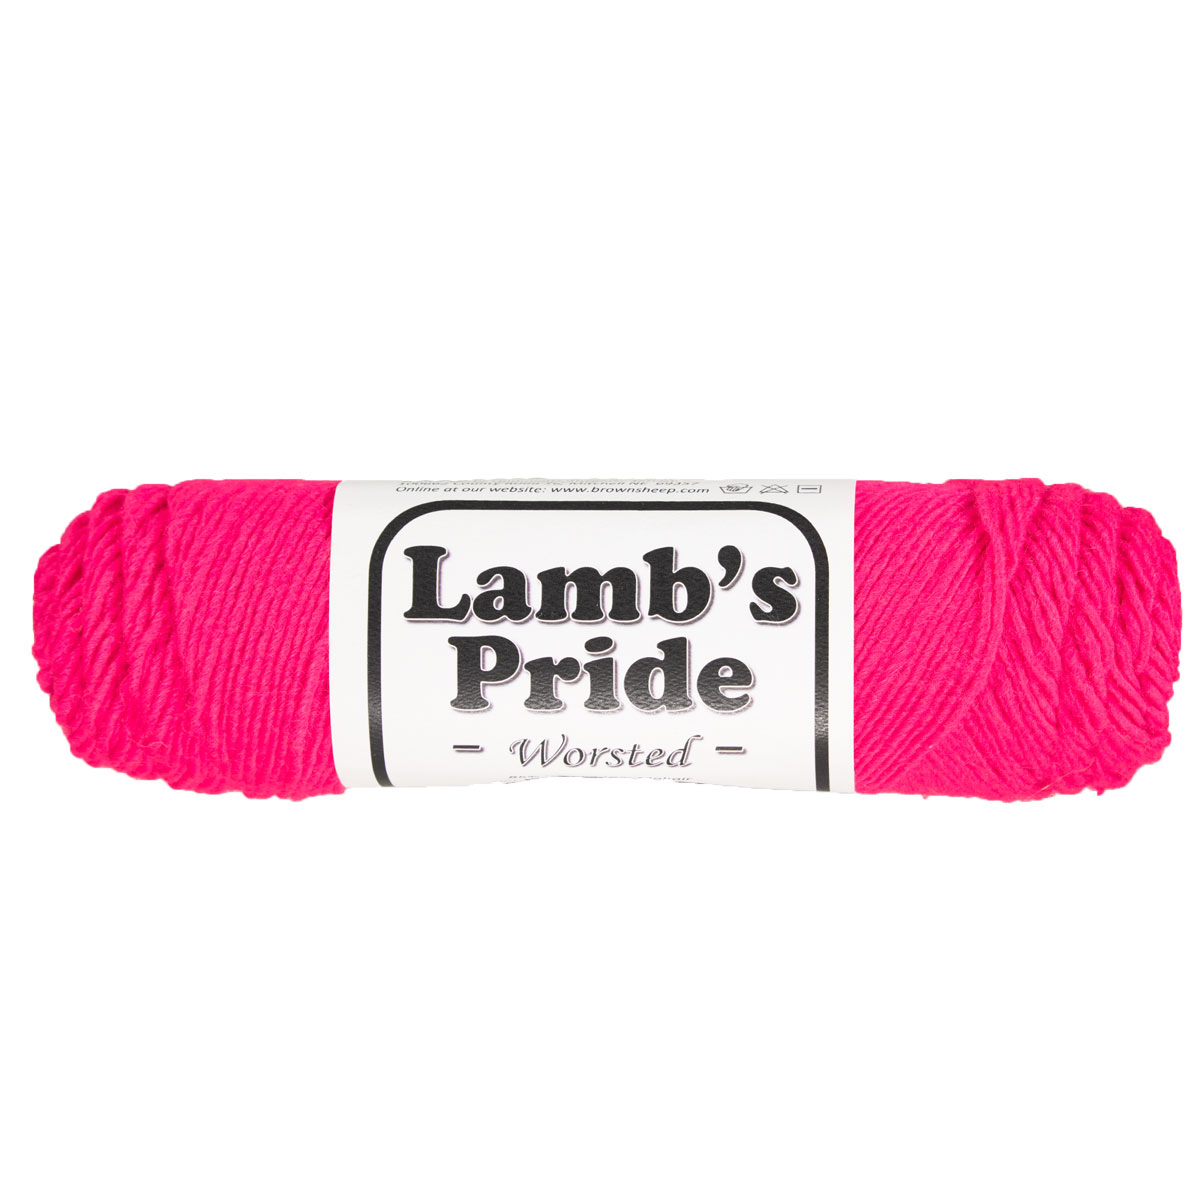 Brown Sheep Lamb's Pride Worsted Yarn - M178 - Warm Caramel at Jimmy Beans  Wool